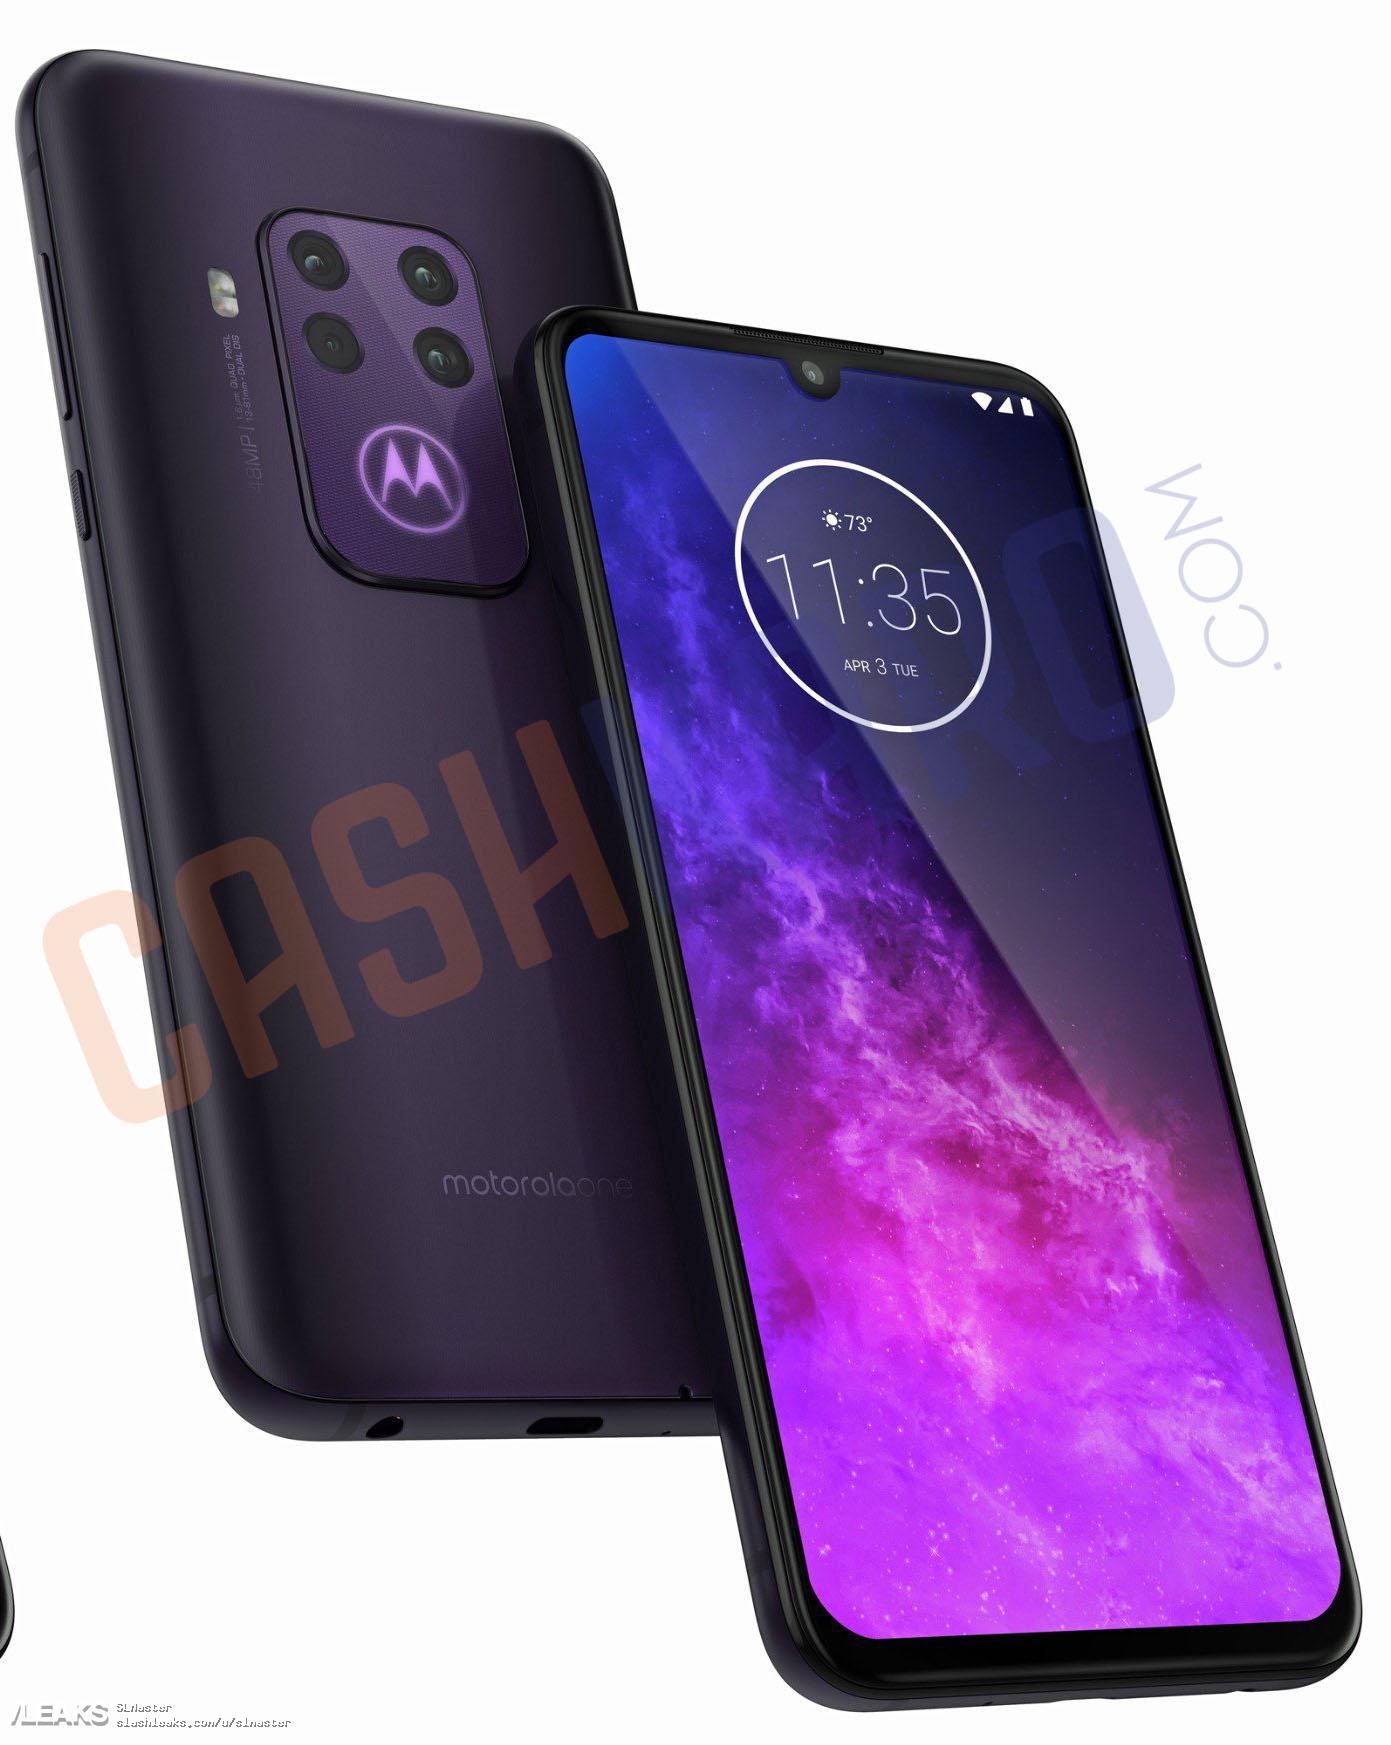 Alleged render of the Motorola One Pro 3